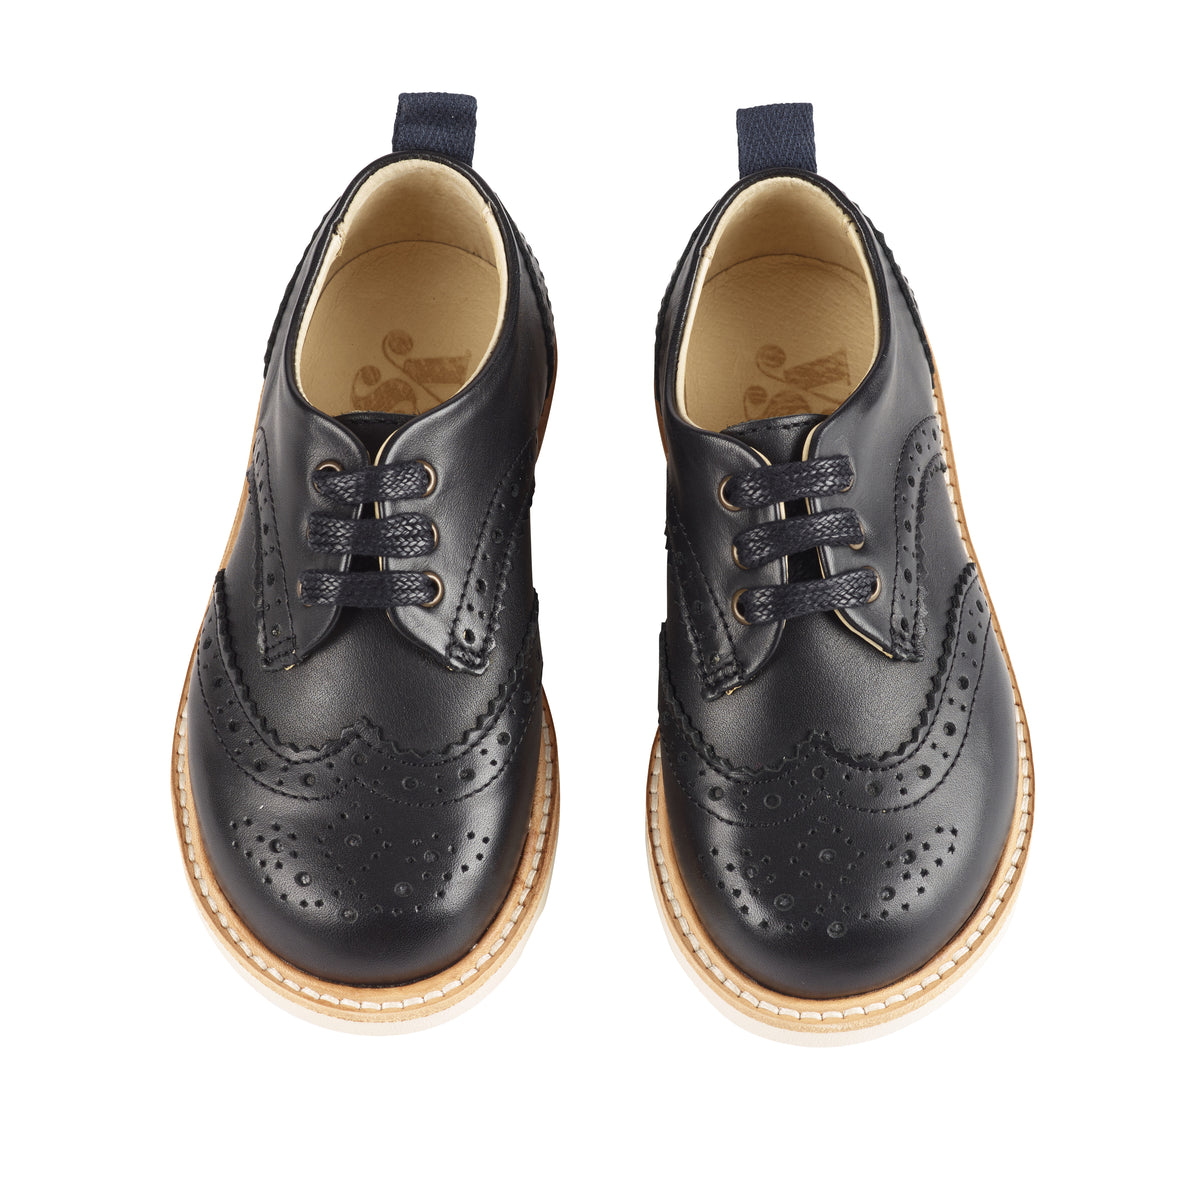 Brando Brogue Shoe - Black - LAST PAIRS - Sizes 24, 25, 26, 27 ONLY ...